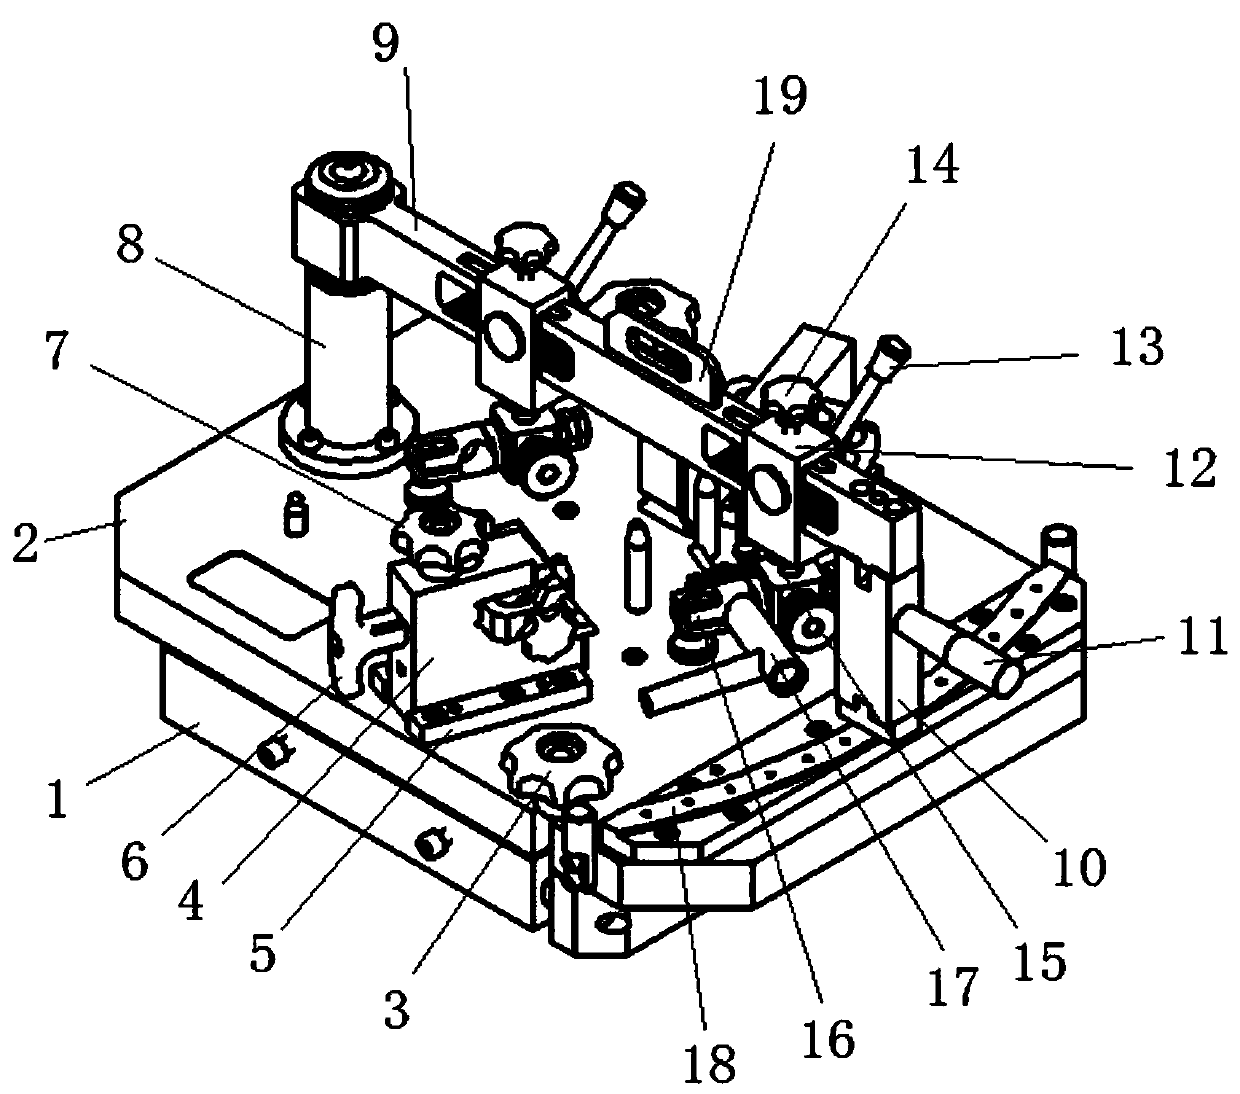 Clamp for assembling aero-engine fan-shaped block assemblies